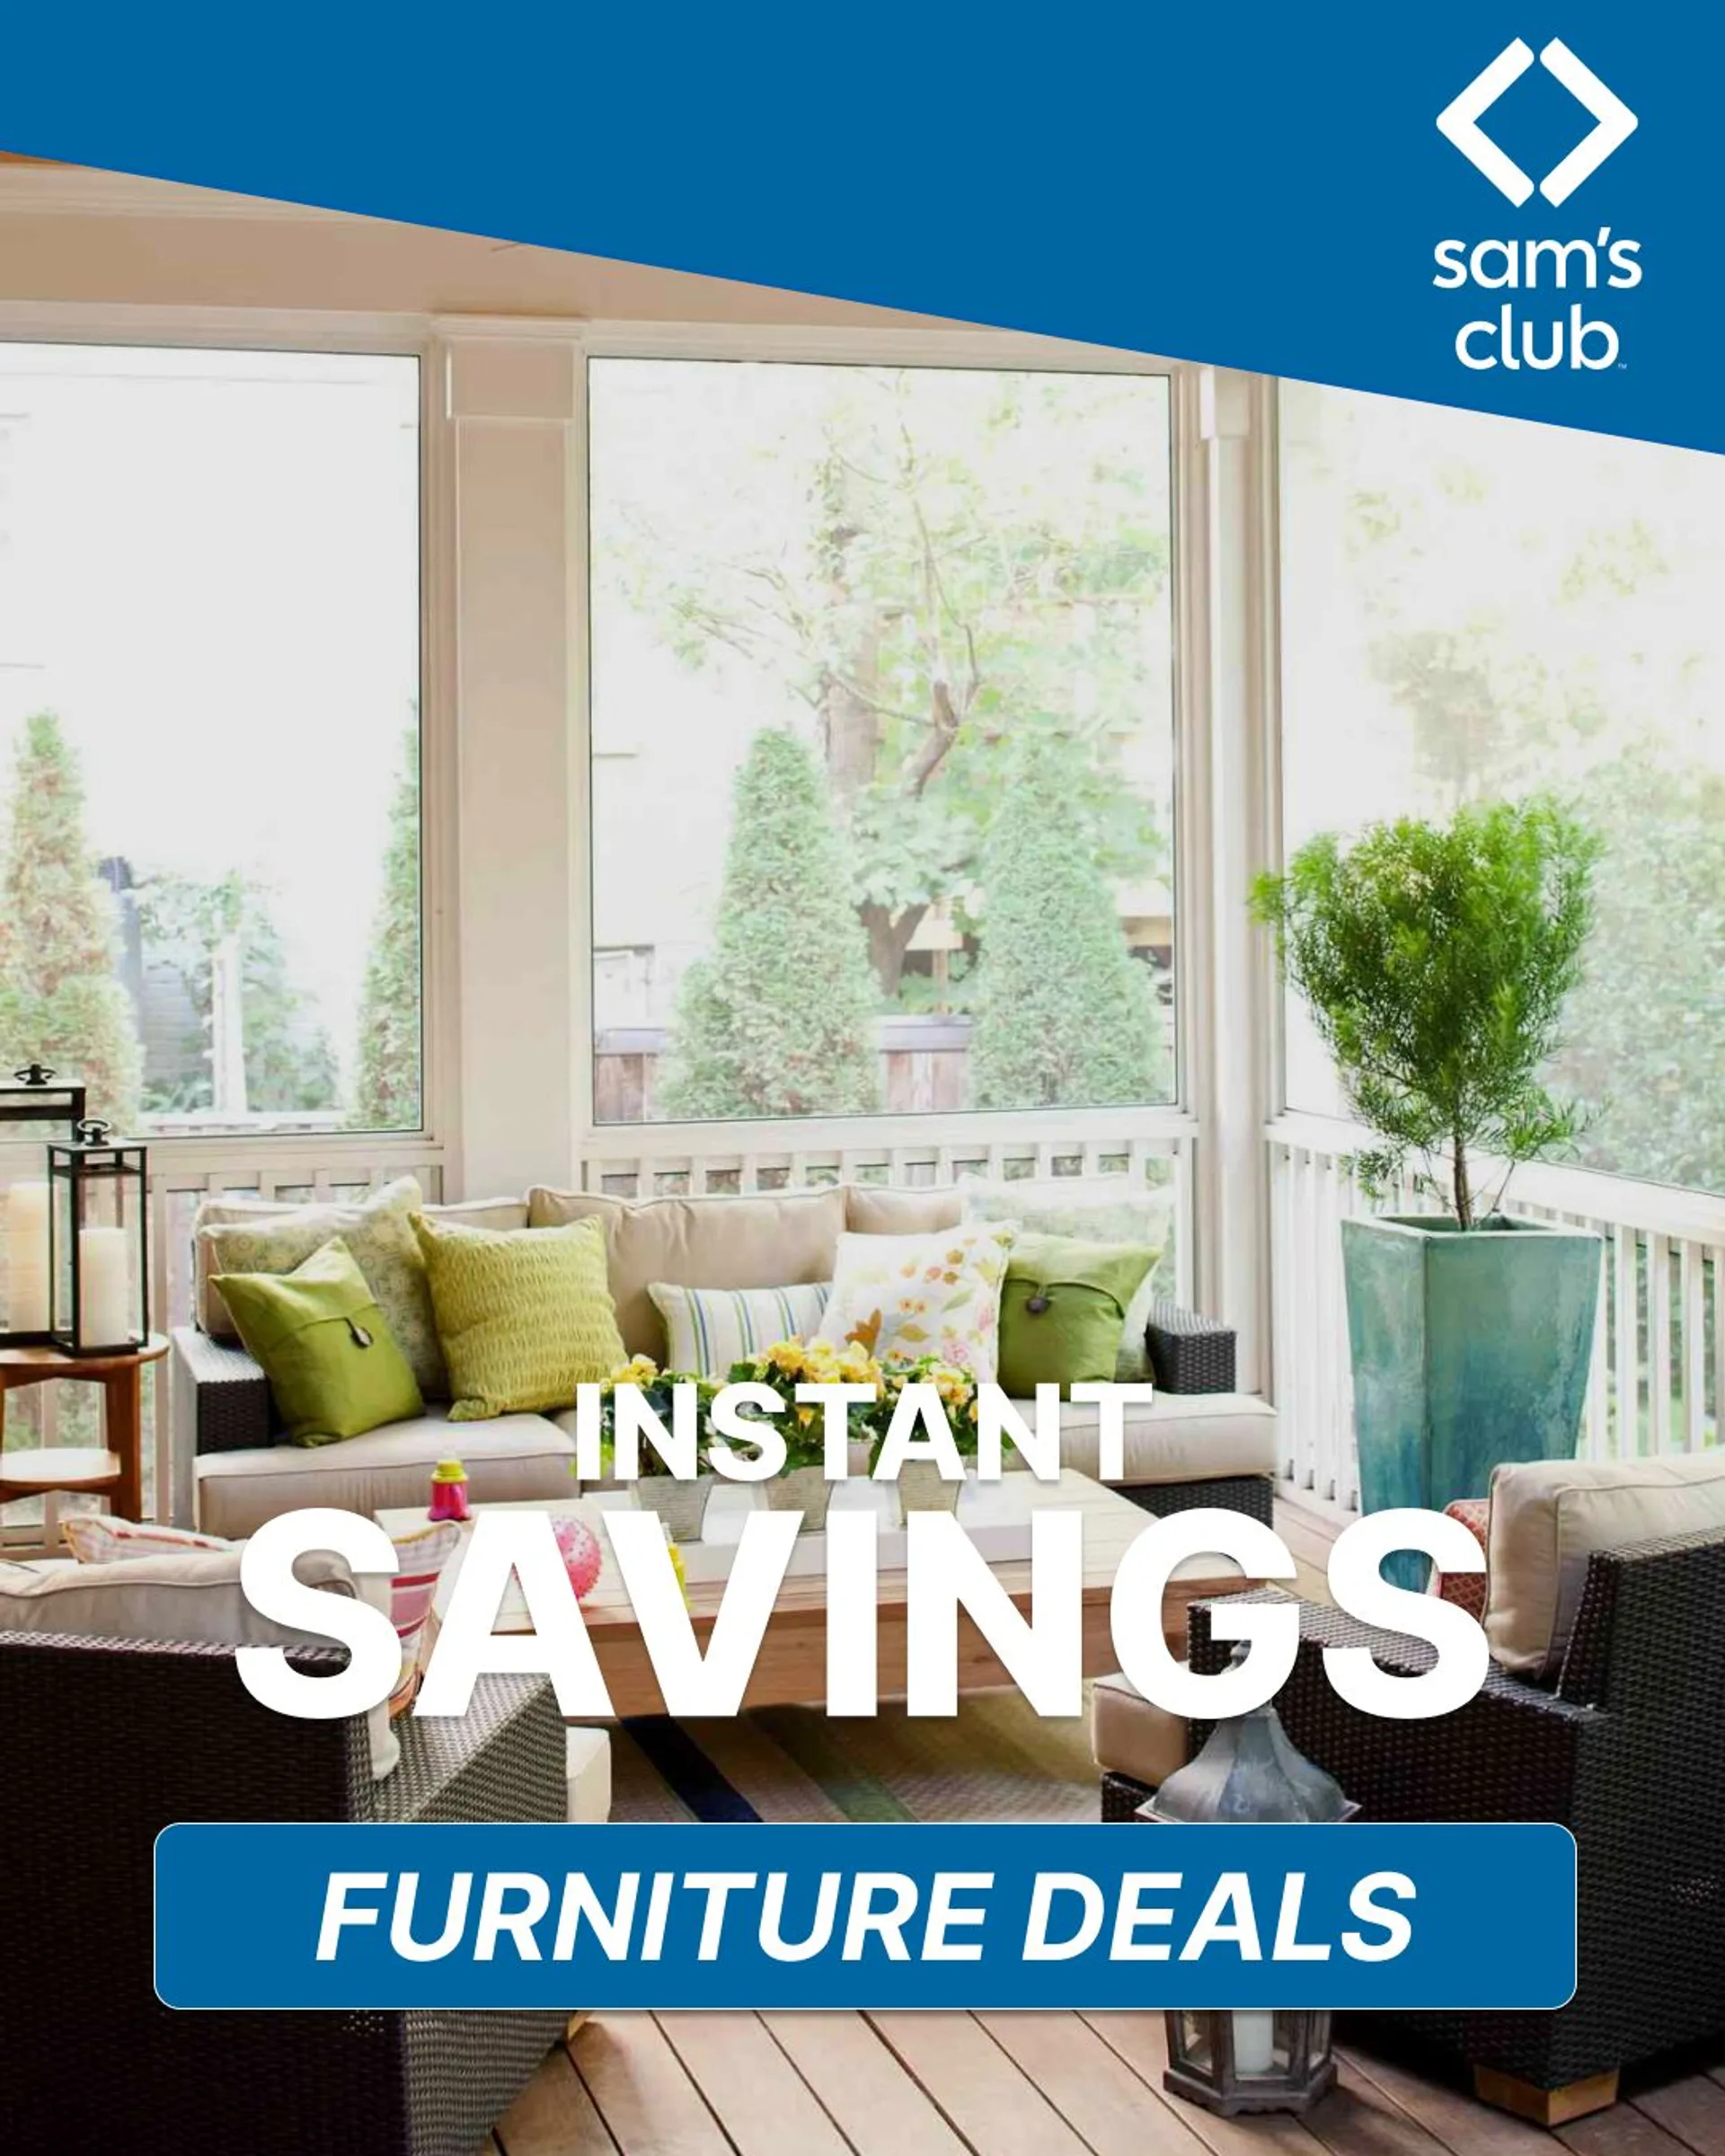 Sam's Club - Furniture deals & discounts